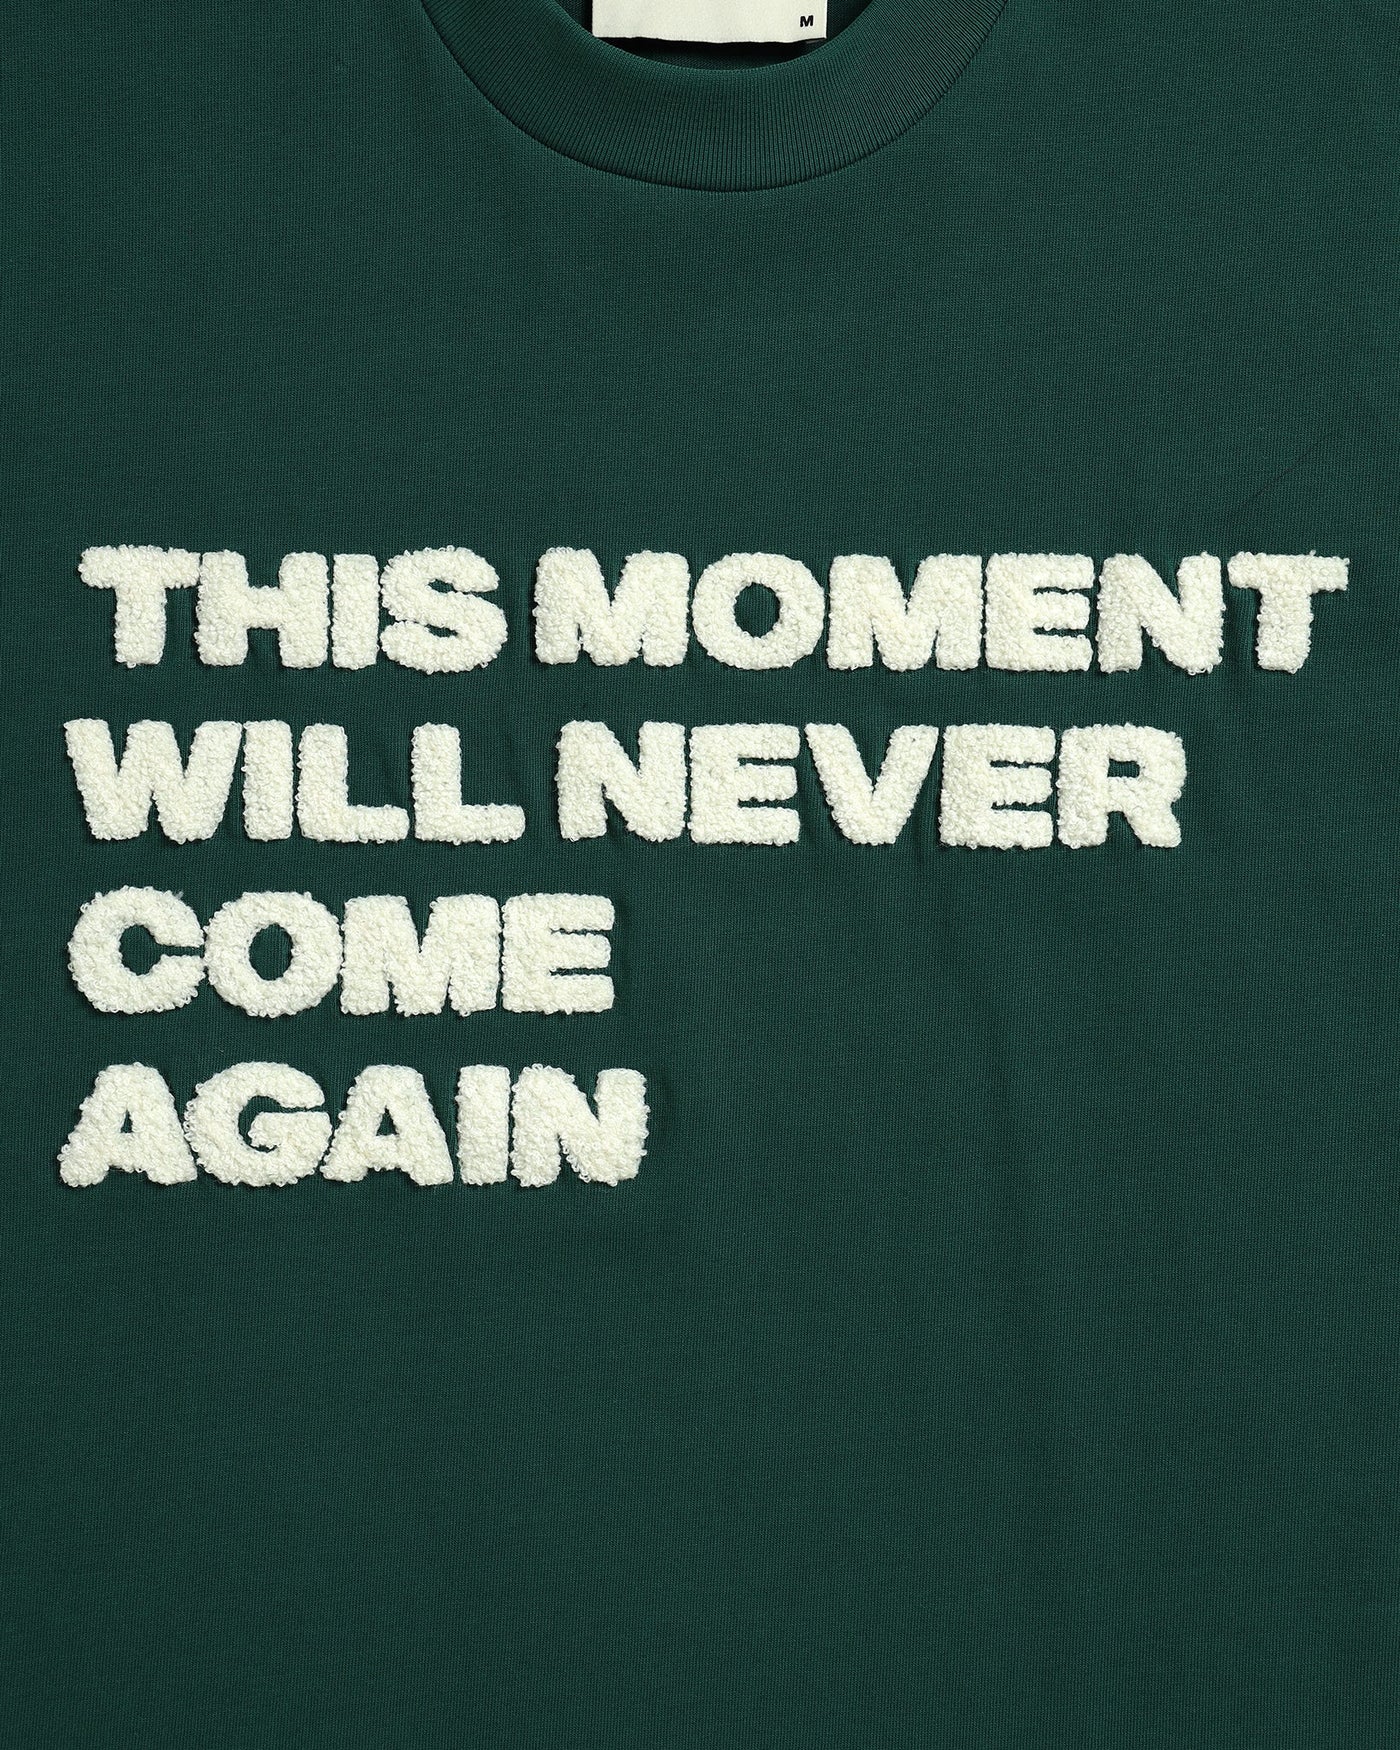 Never Come Again T-shirt - Cream - TOBI